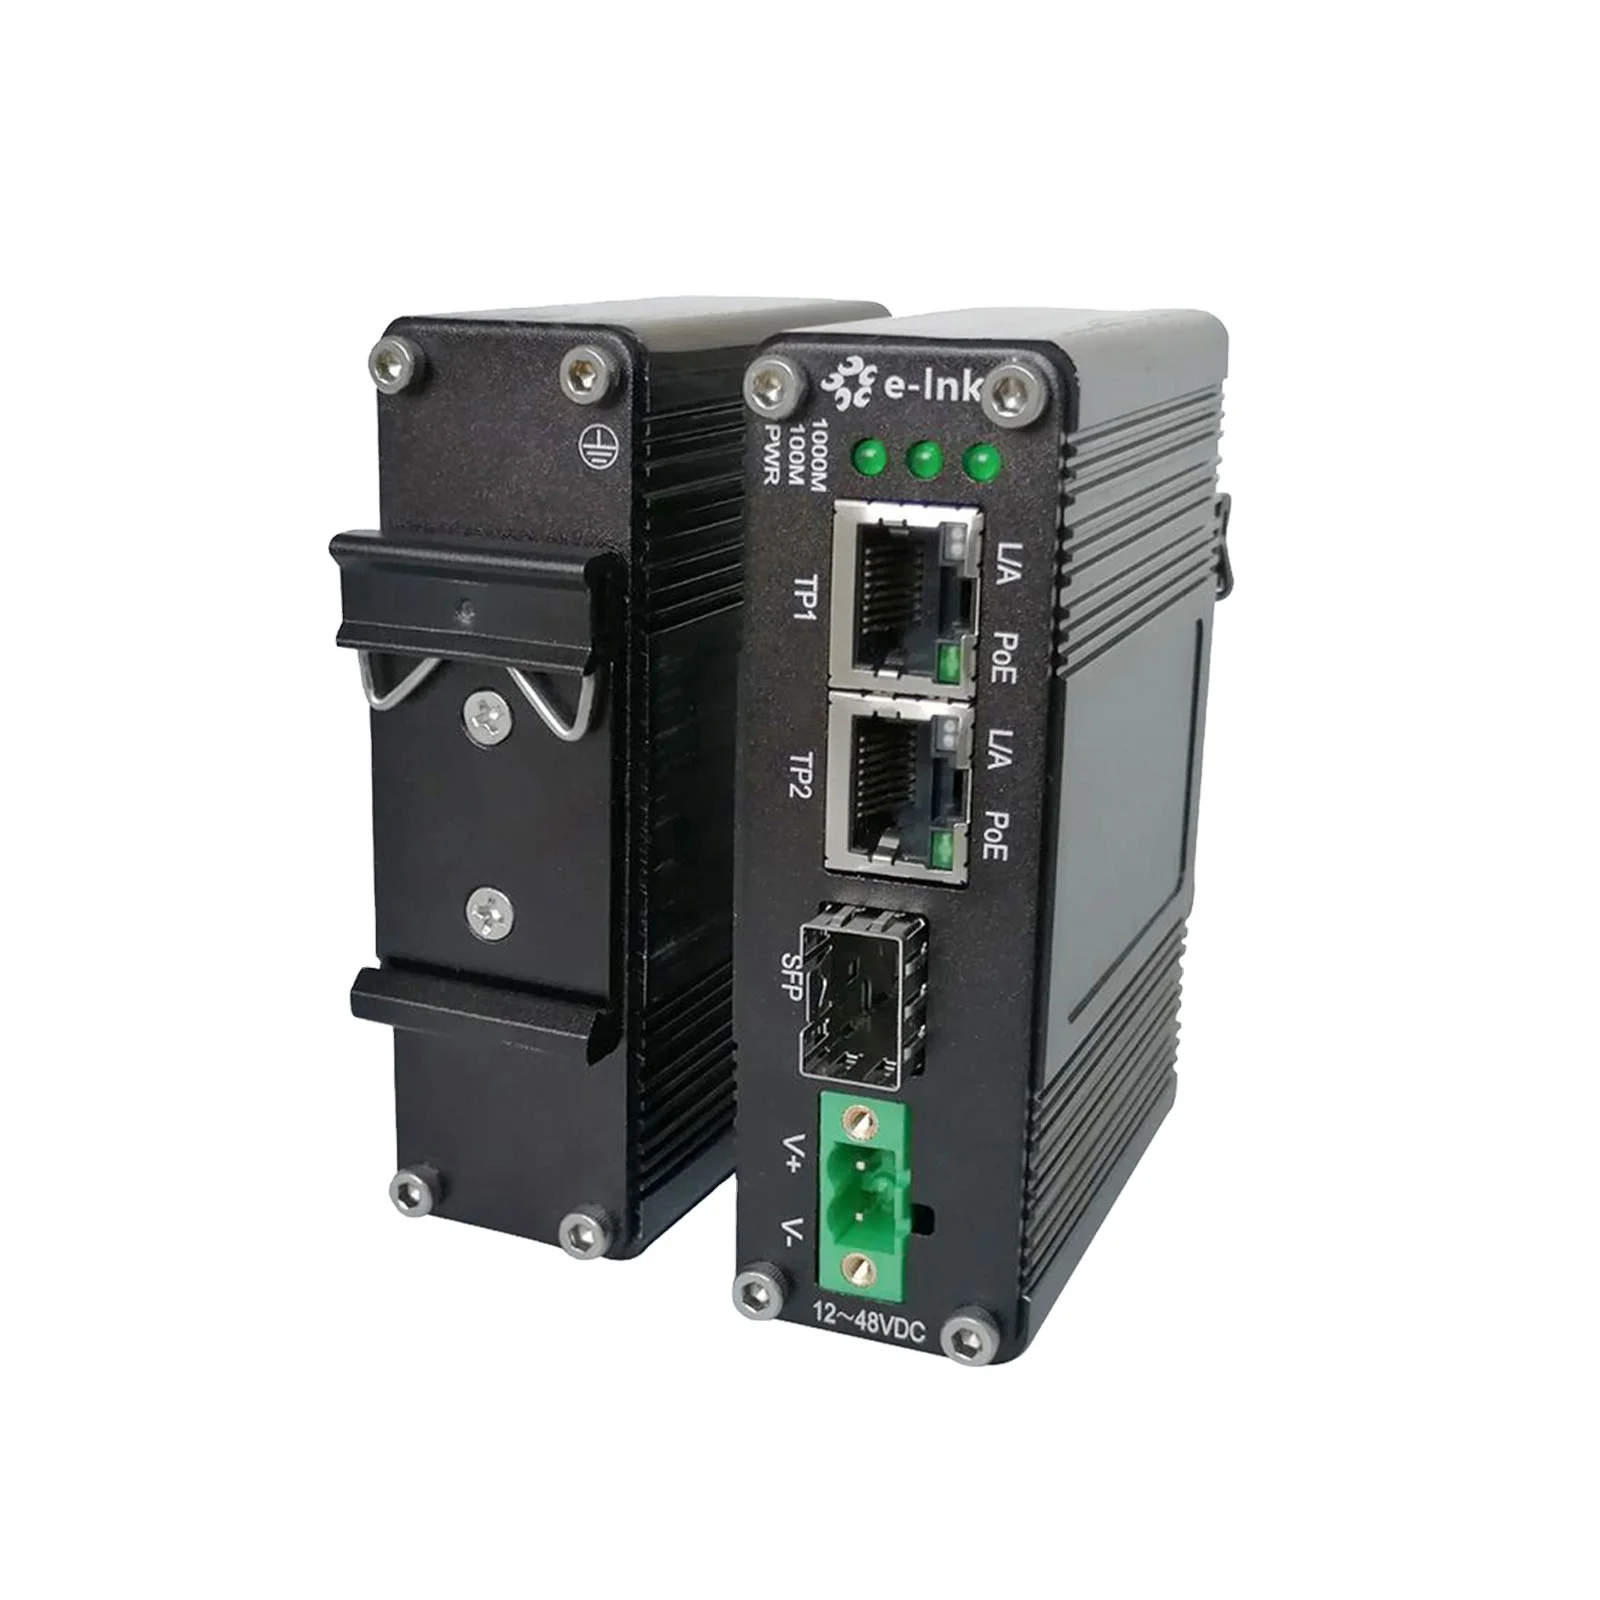 

Fiber Optic Media Converter Mini Industrial 1-Port 100/1000X SFP to 2-Port 10/100/1000T Ethernet Media Converter